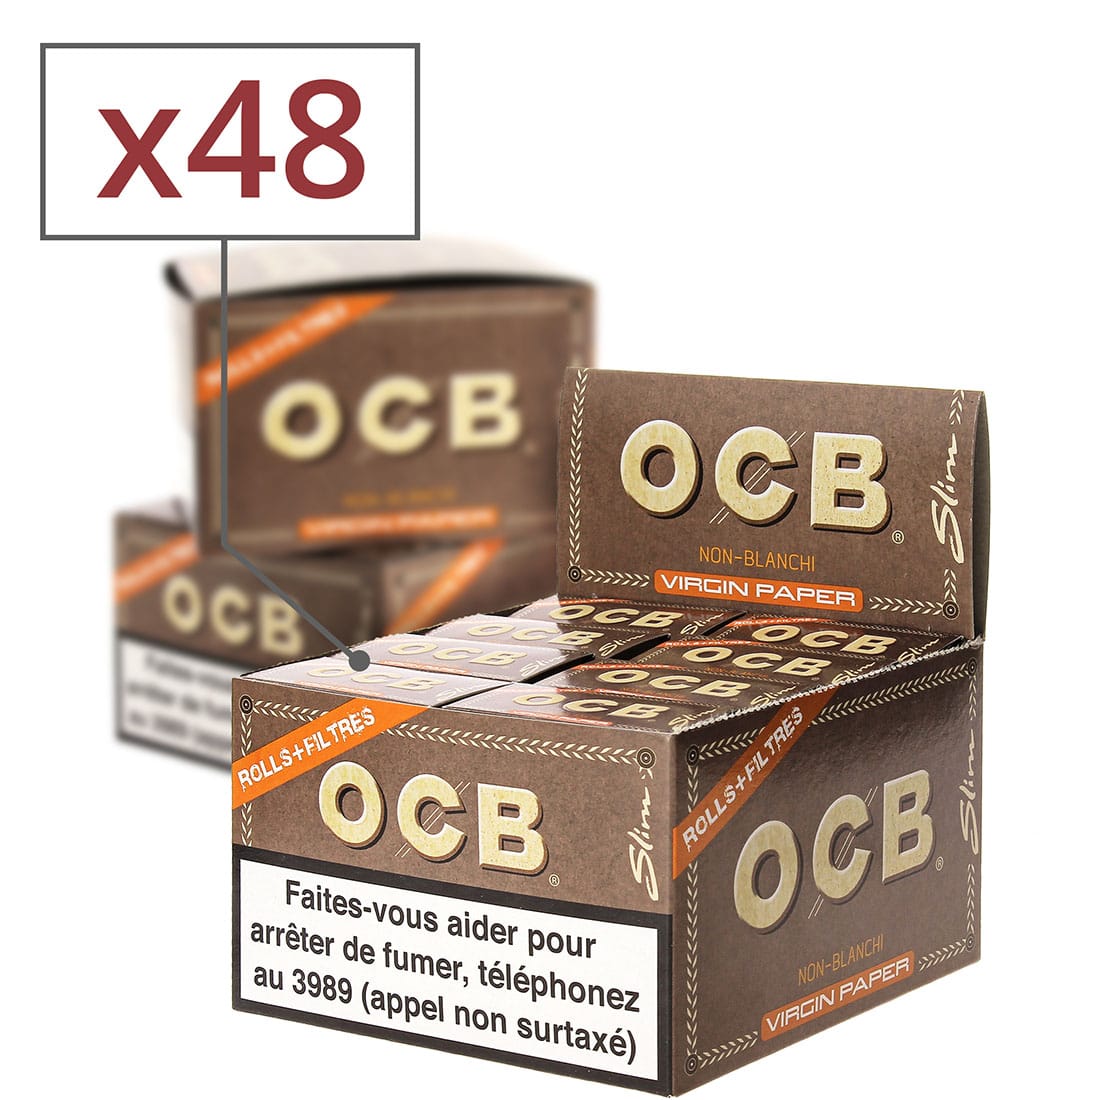 OCB ROLLS PREMIUM SLIM 2 boite de 24 Rouleau neuf dans le carton d'origine. 